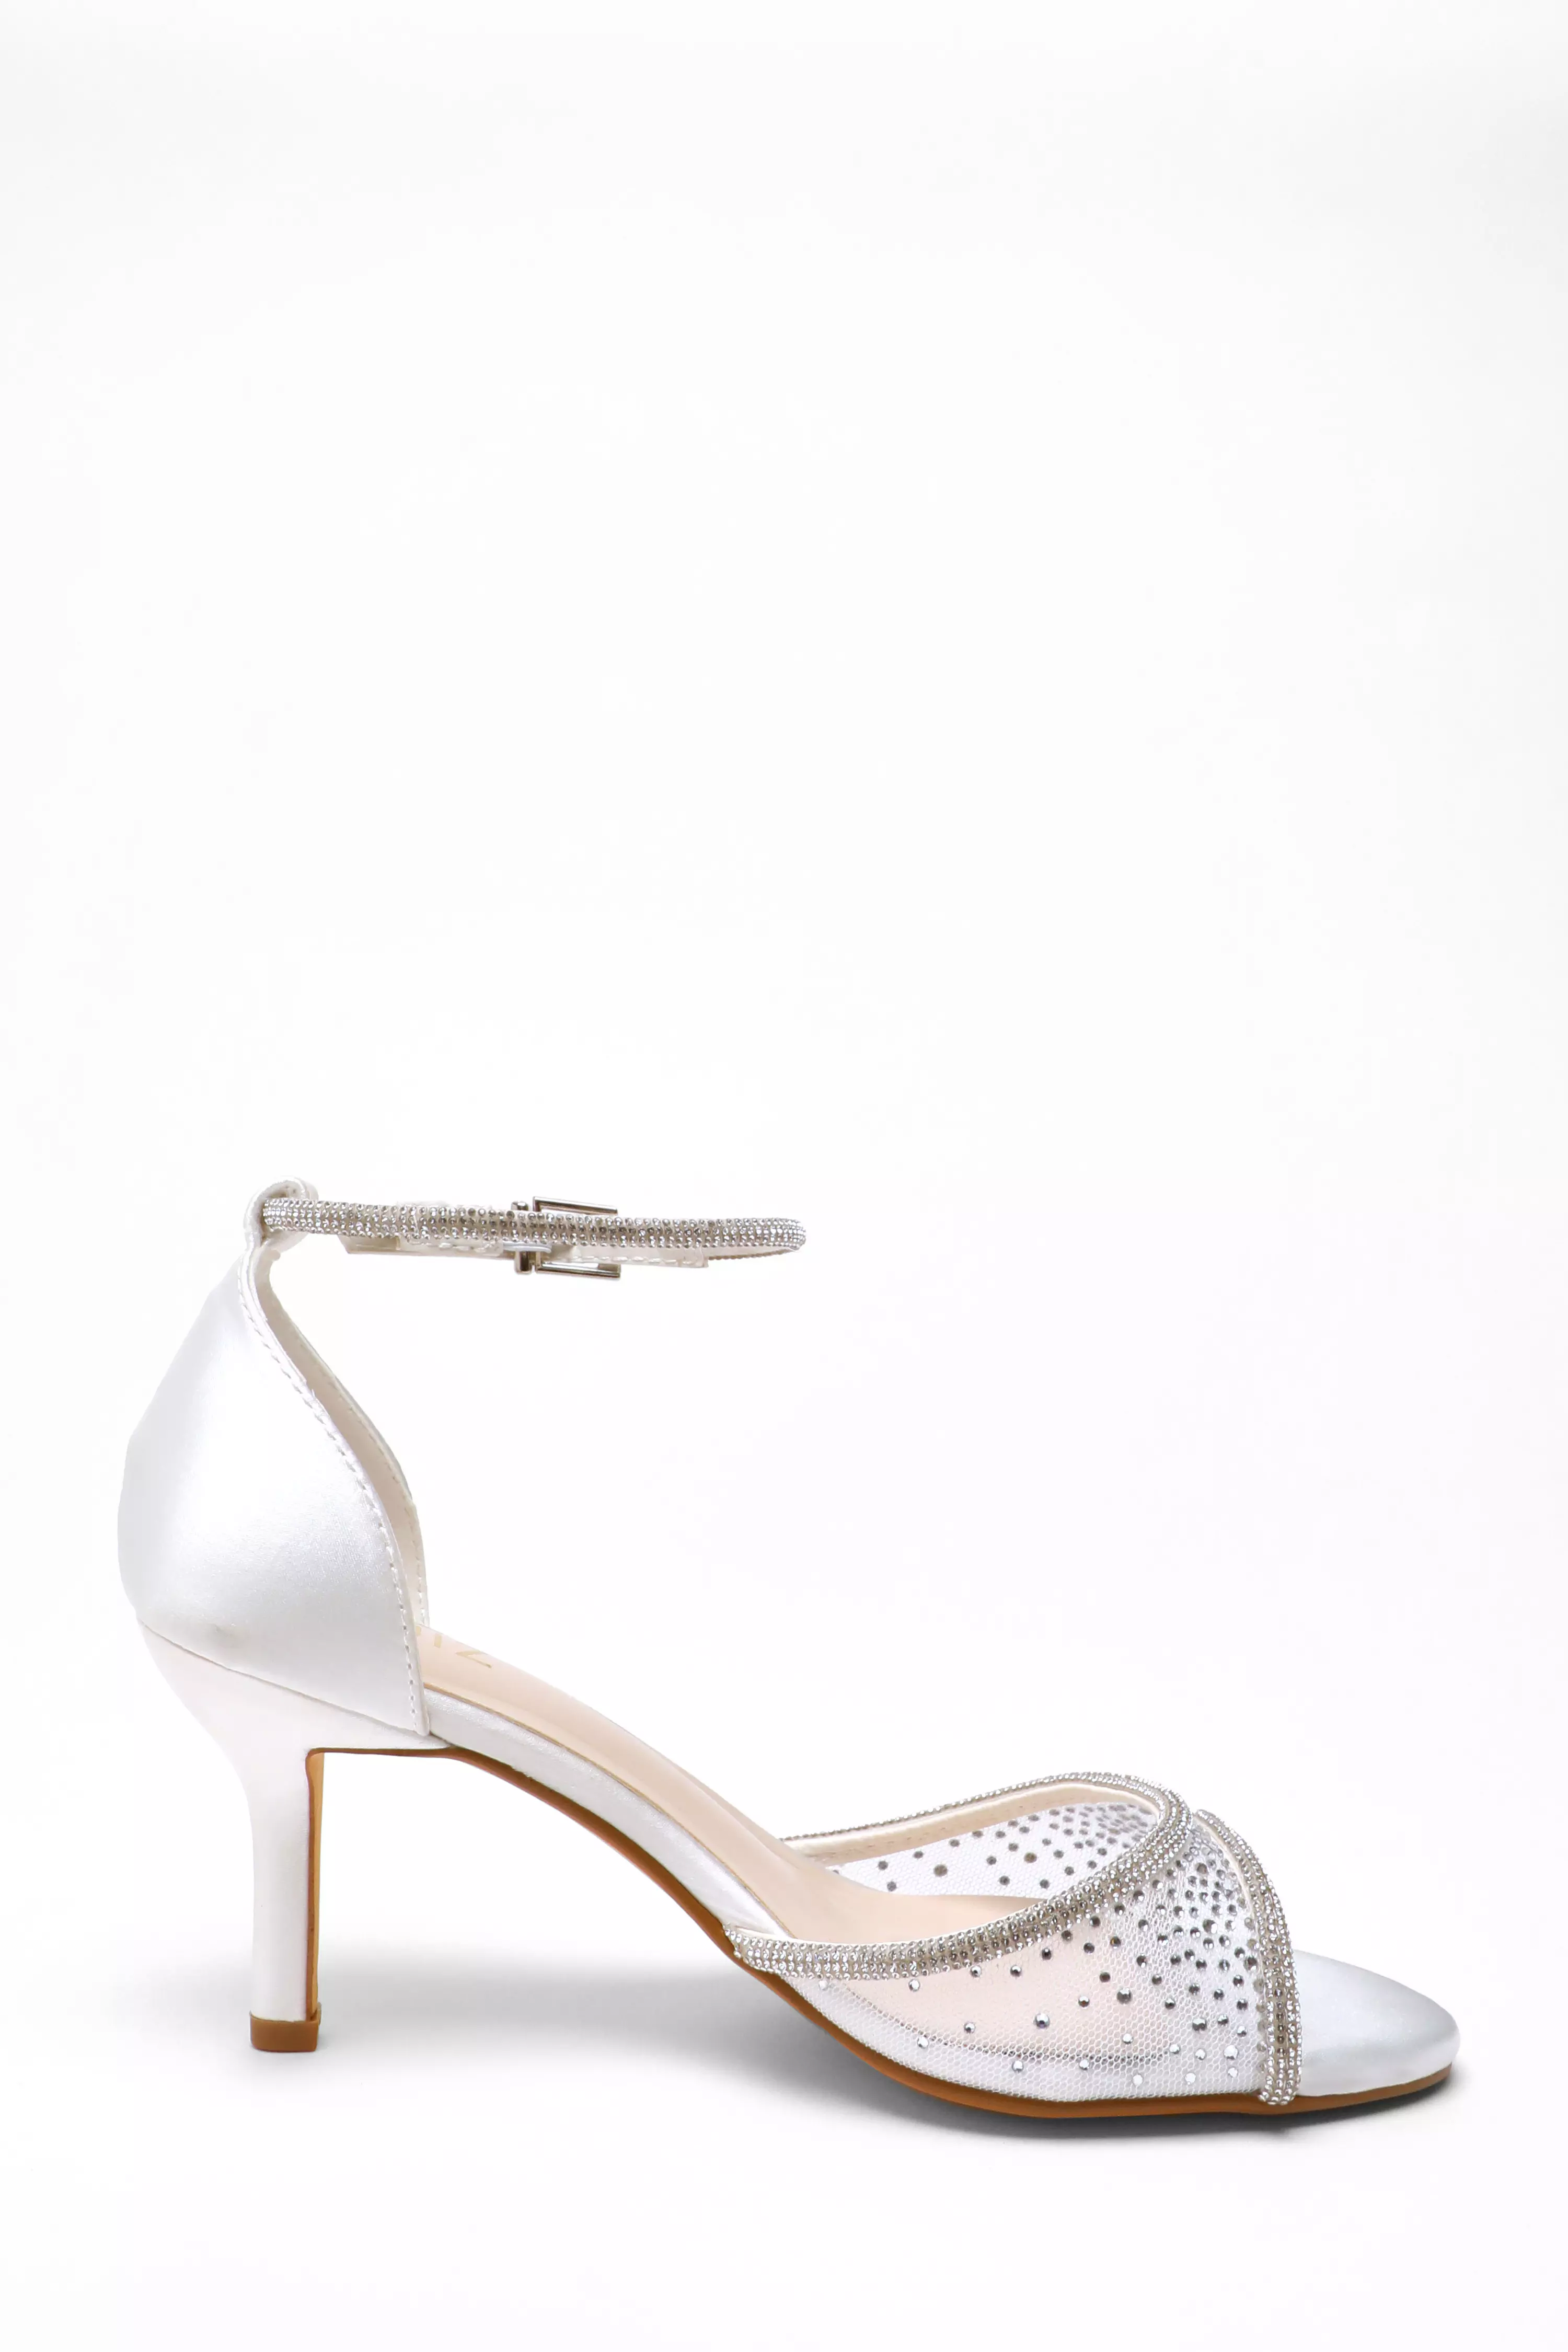 Bridal White Satin Embellished Low Heels